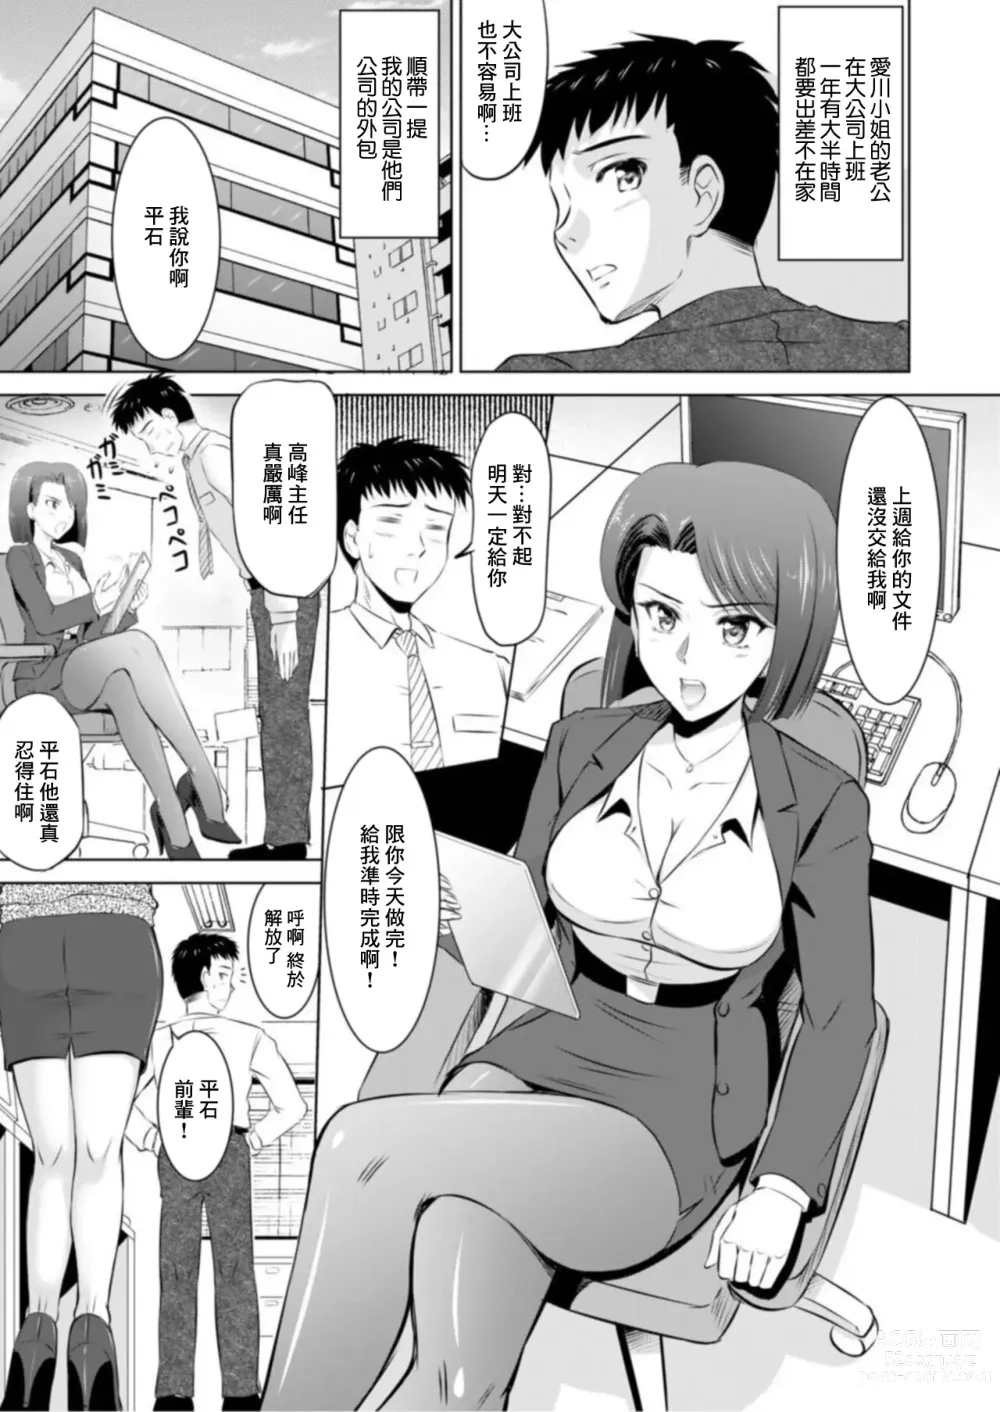 Page 7 of doujinshi 隔壁人妻對於Cosplay做愛非常擅長...